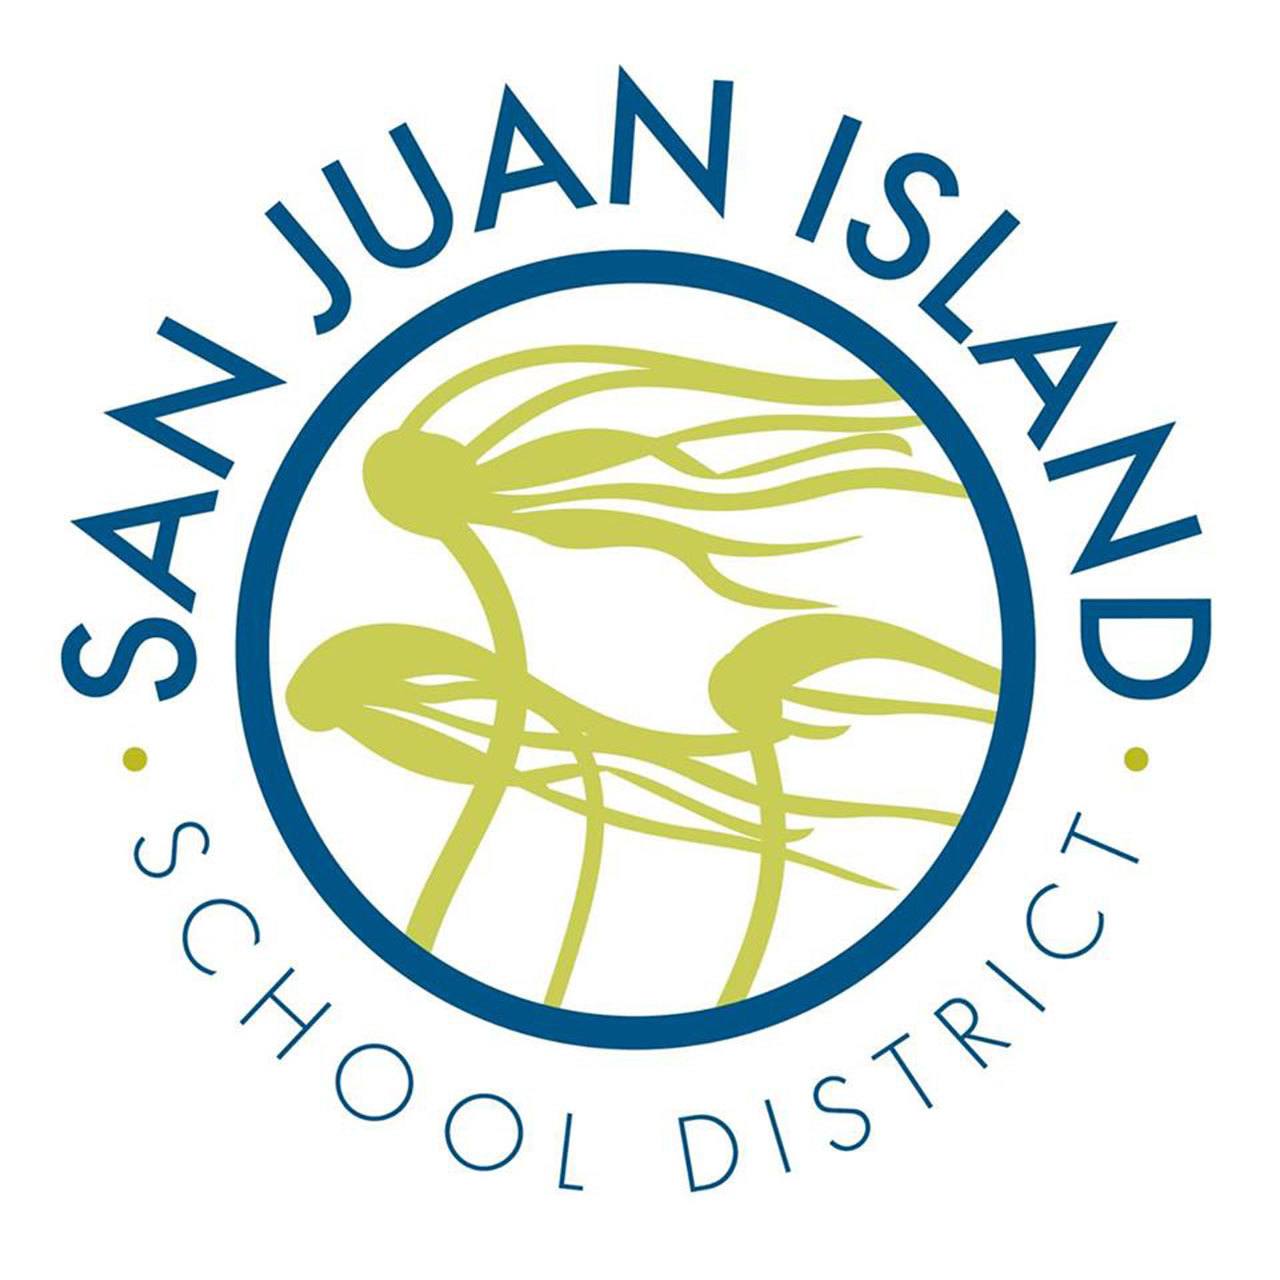 Free SJI School District app available